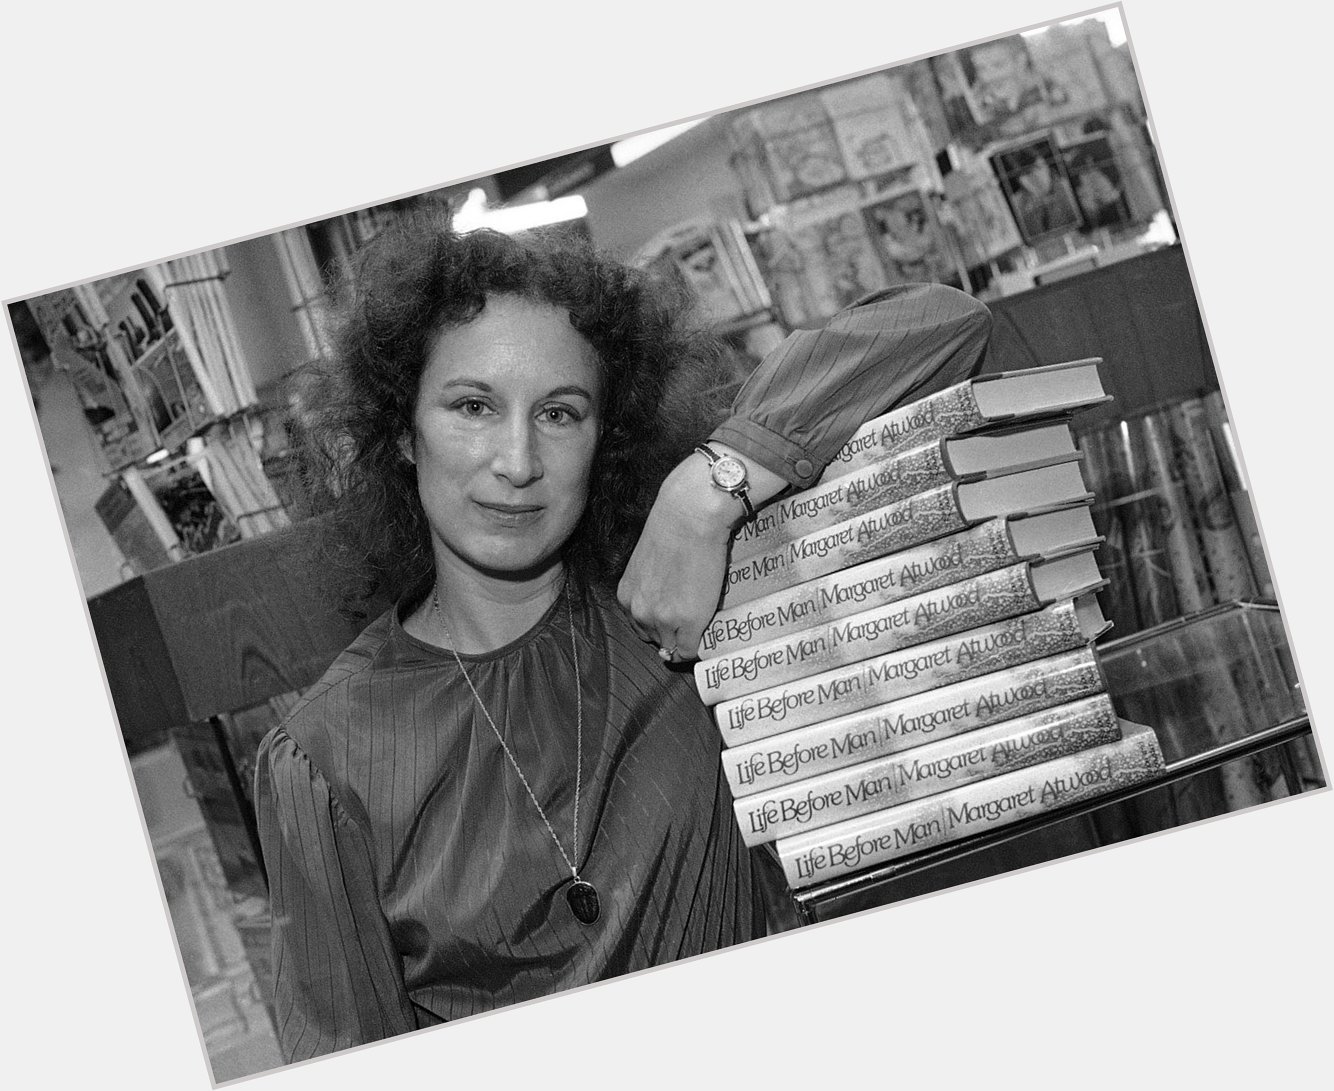 Happy birthday, Margaret Atwood! 